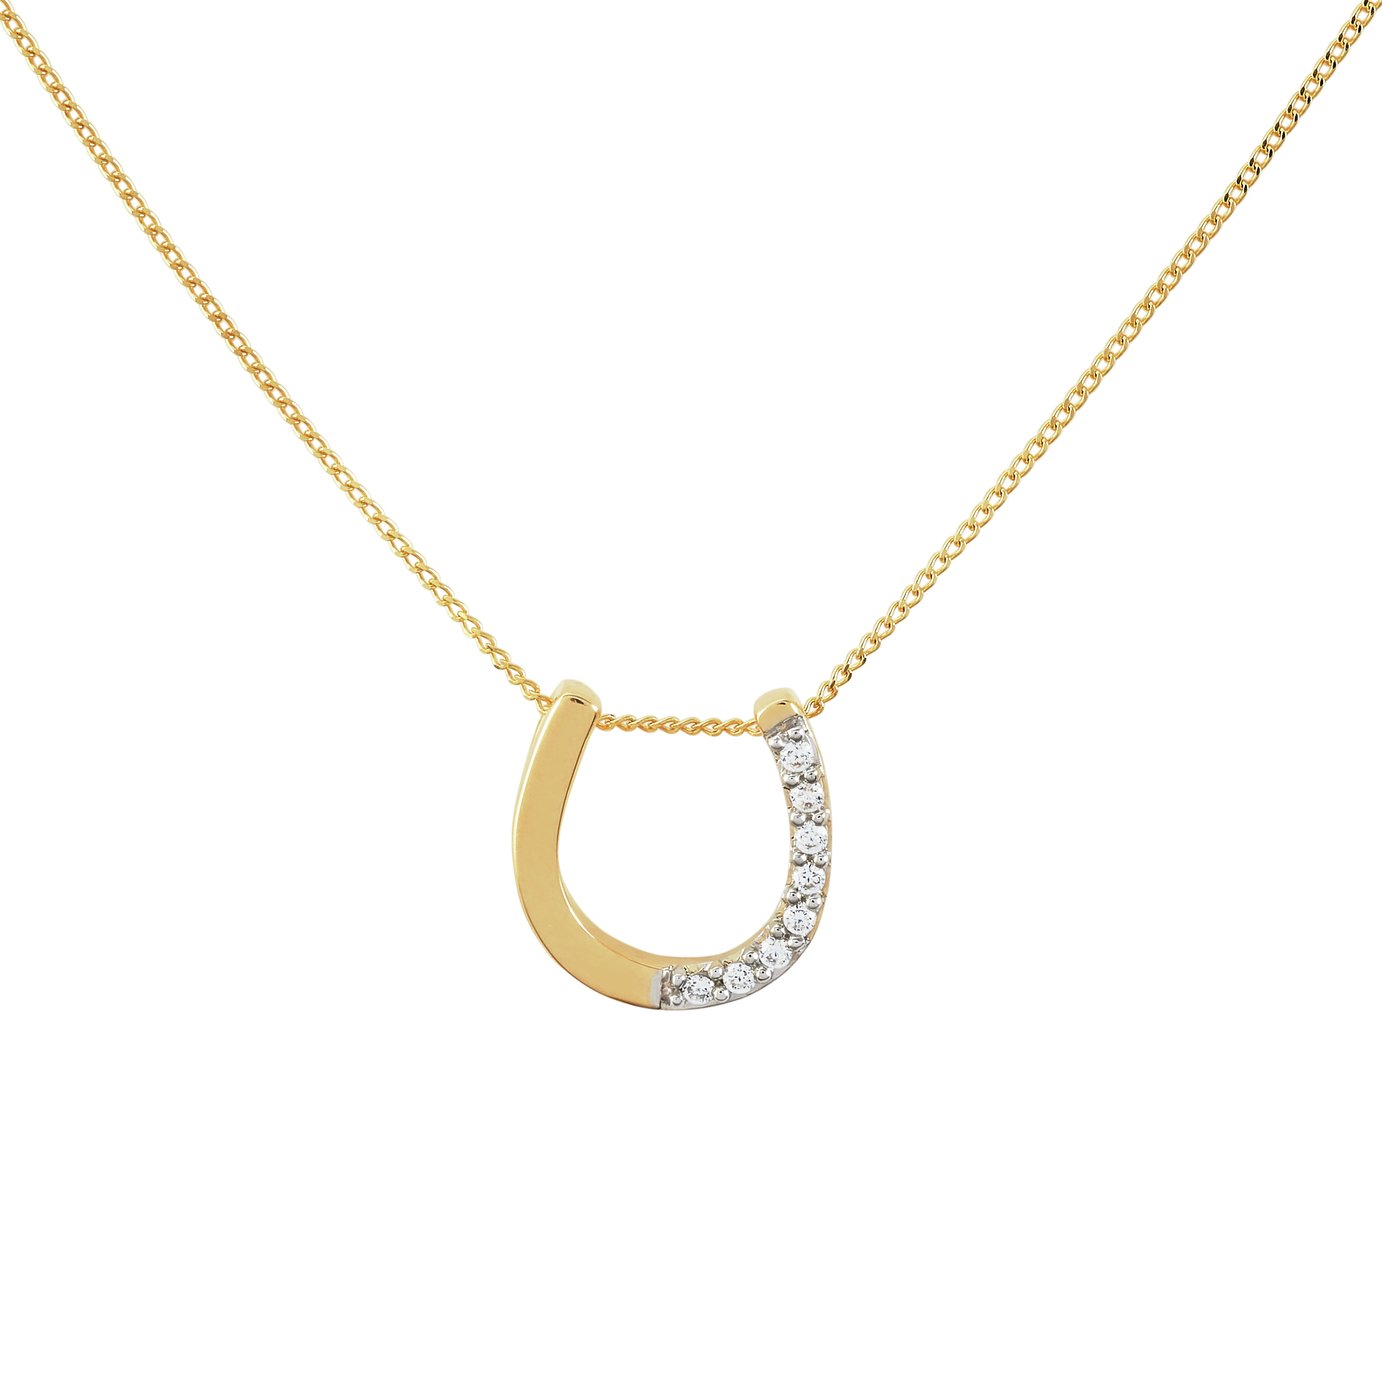 Revere 9ct Gold Horseshoe Pendant 18 Inch Necklace